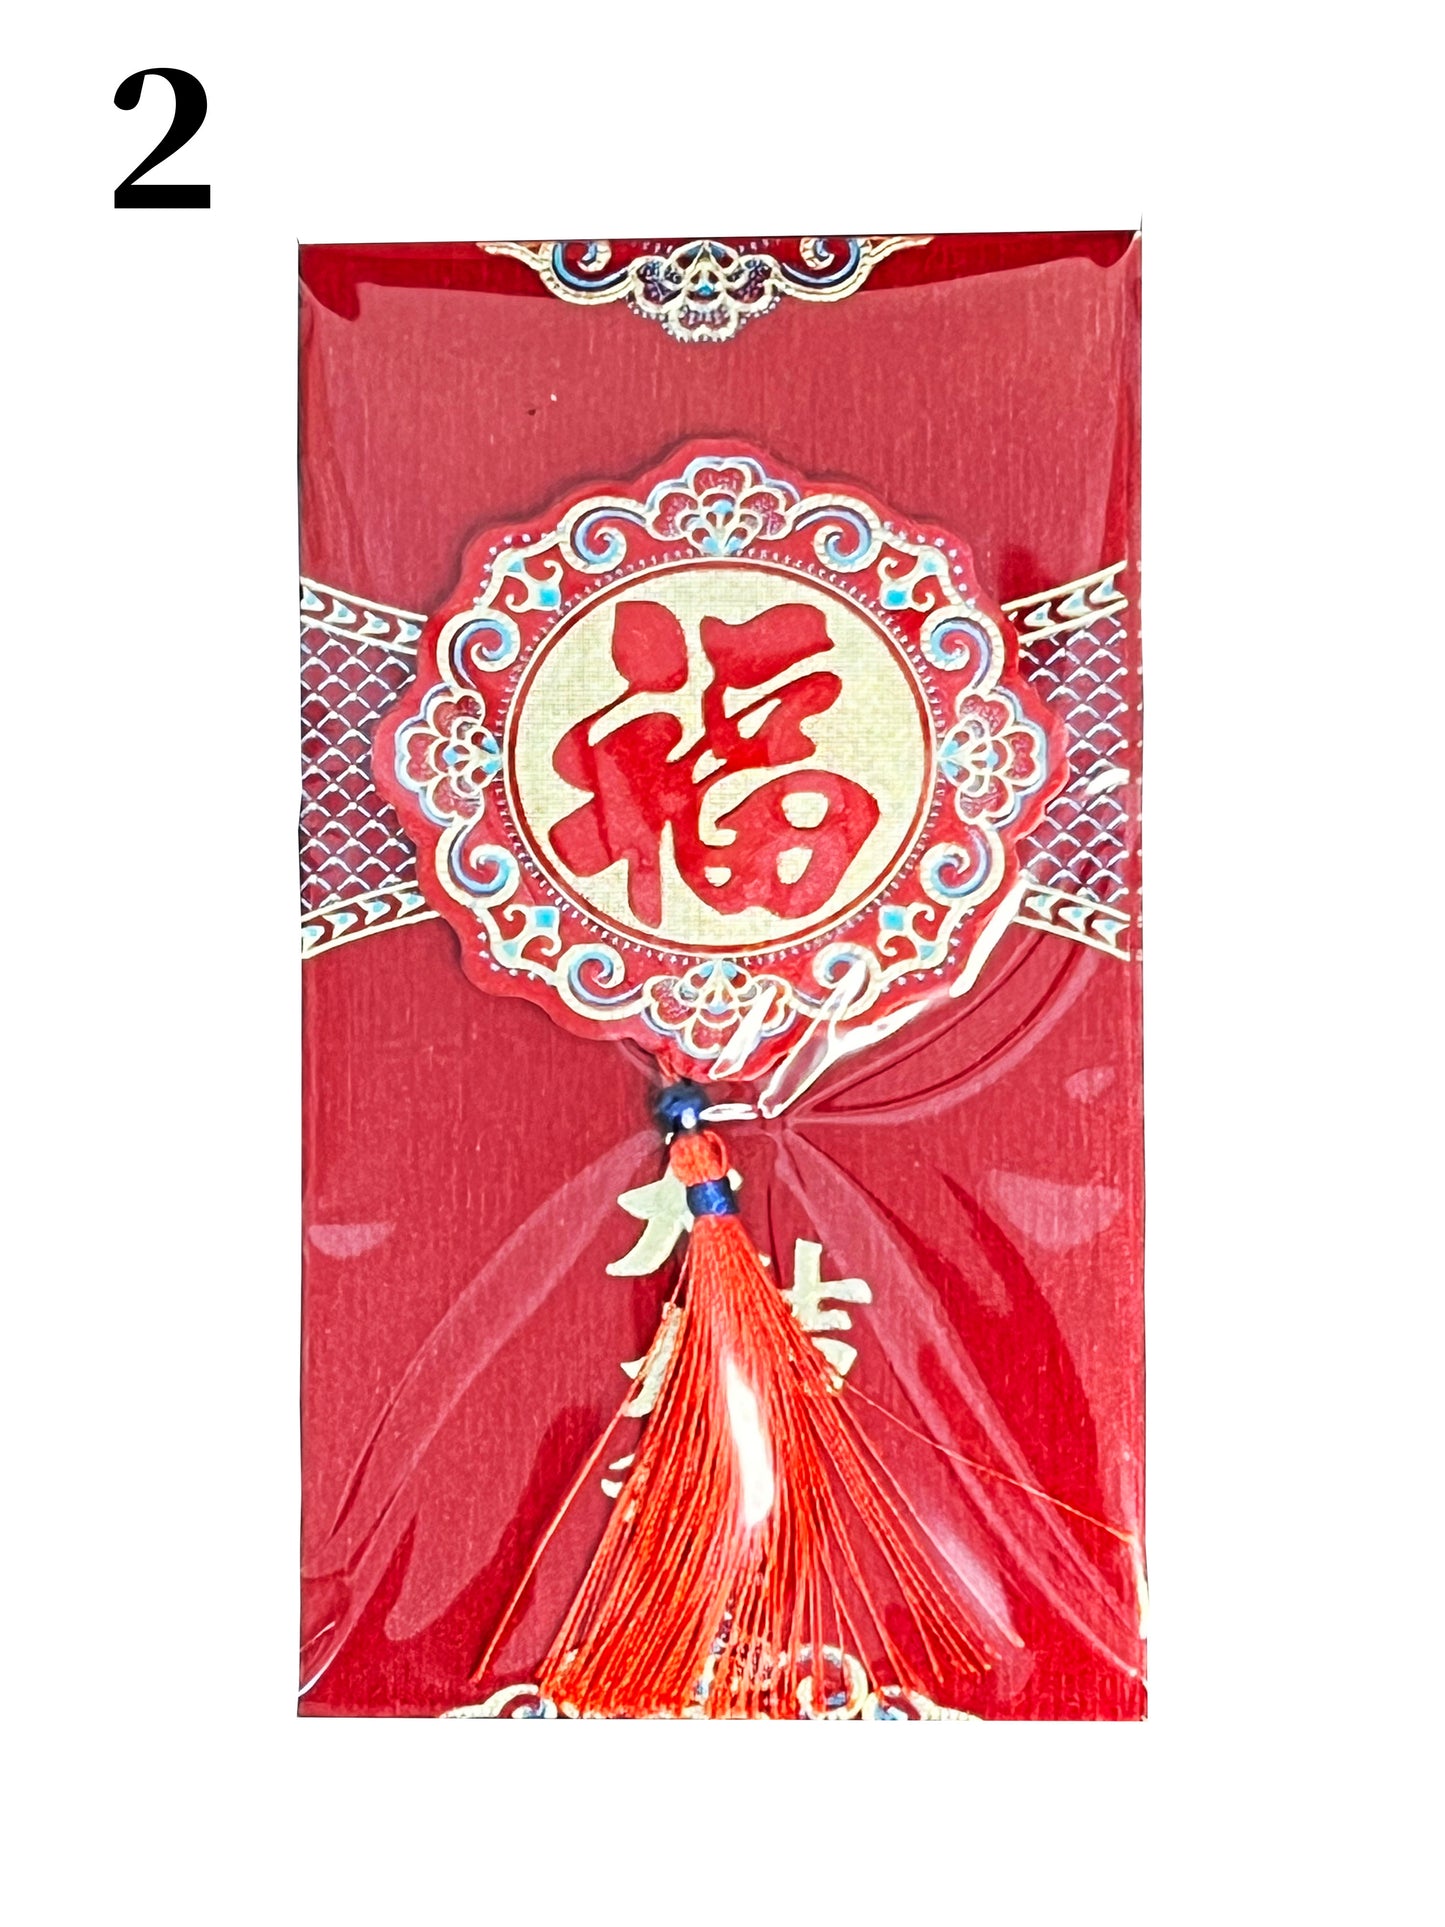 Lunar New Year Red Envelopes 🧧 - Fortune Money Bag for Good Luck